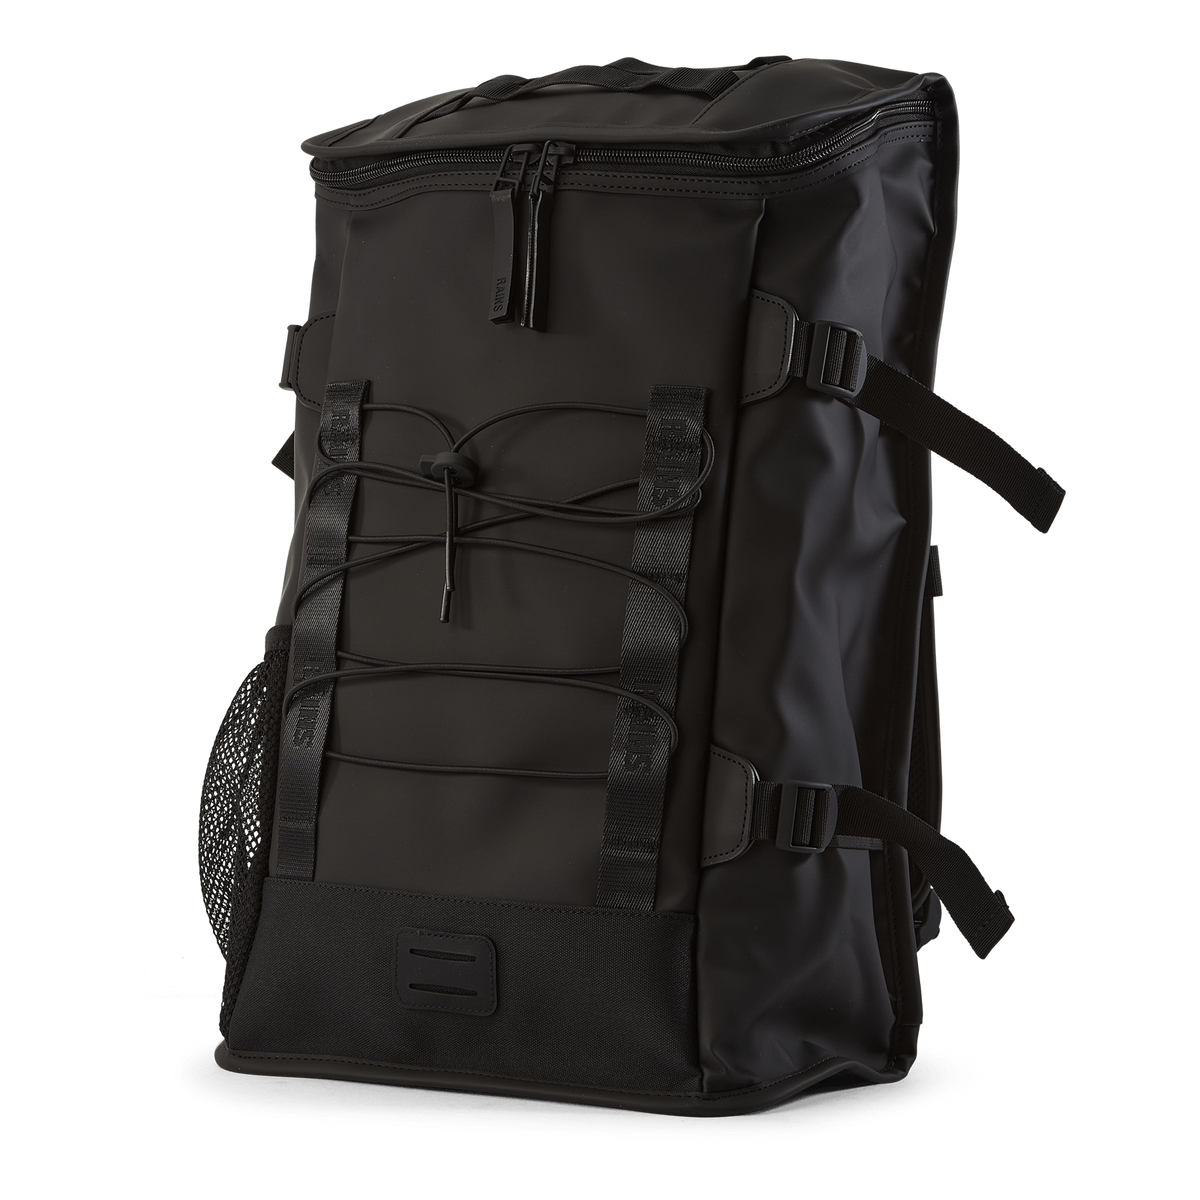 Trail Mountaineer Bag 01 Black